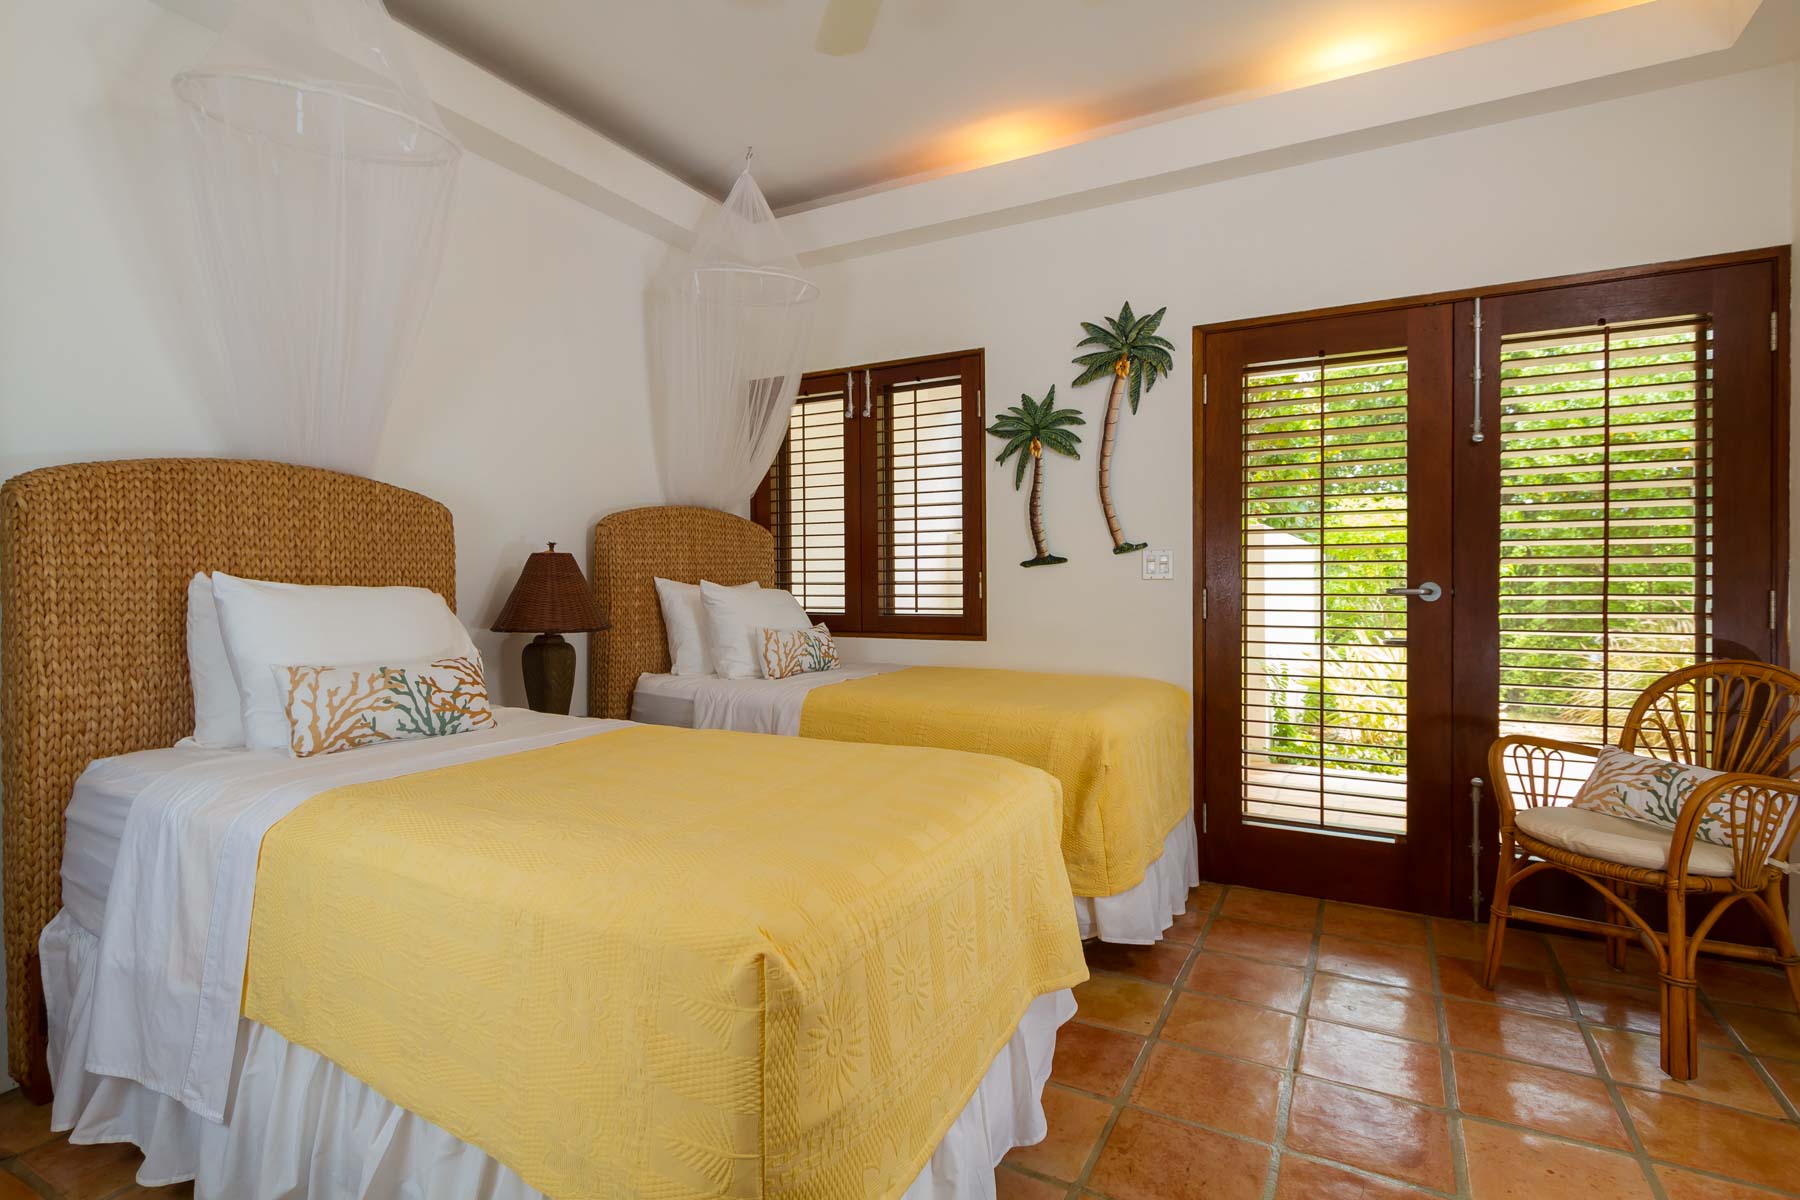 2 Bedroom Anguilla Villa Rental at Meads Bay 